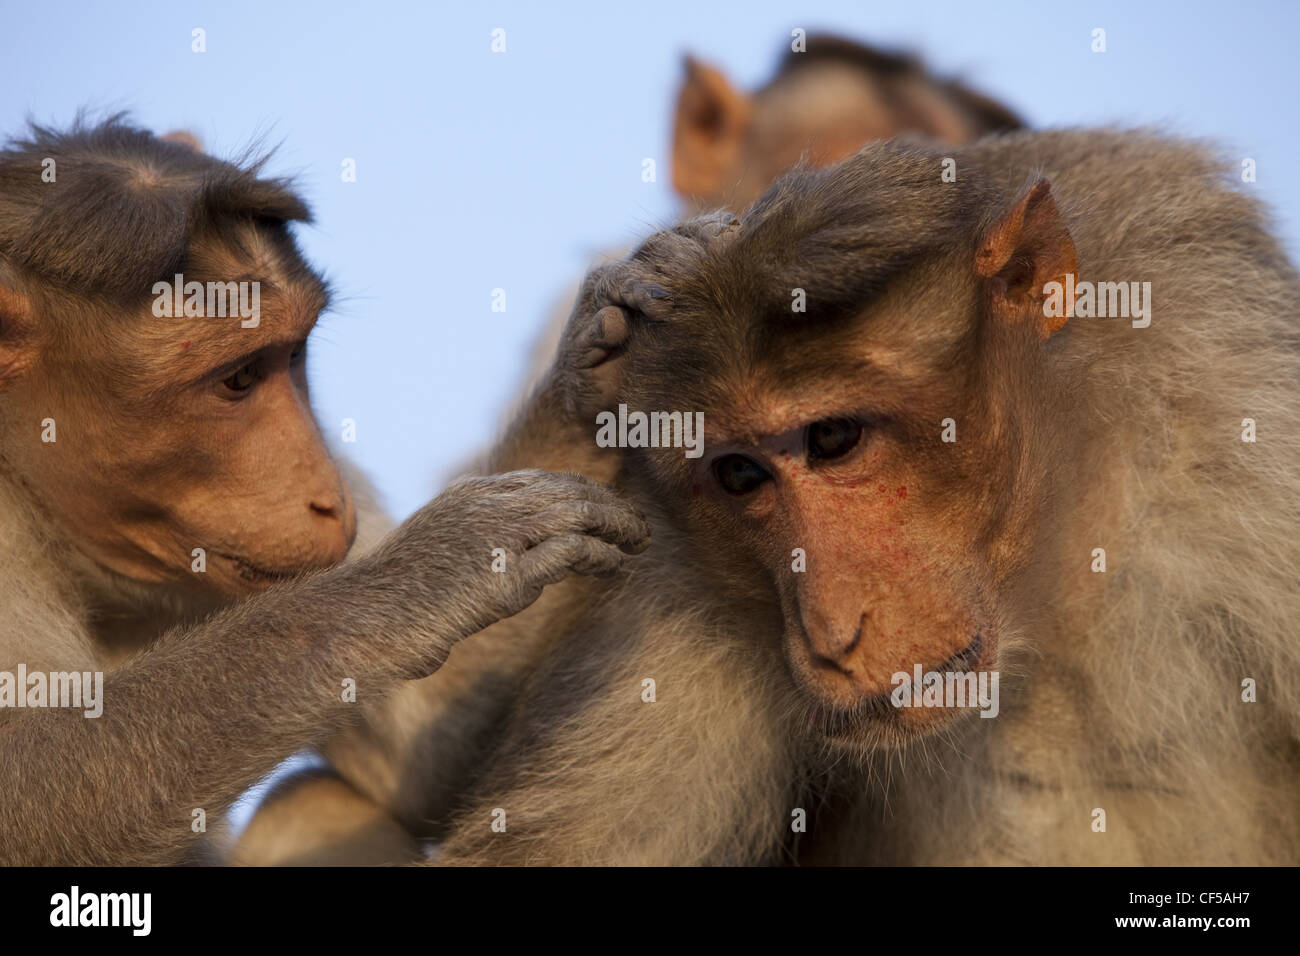 Bonnet Macaque monkey Stock Photo